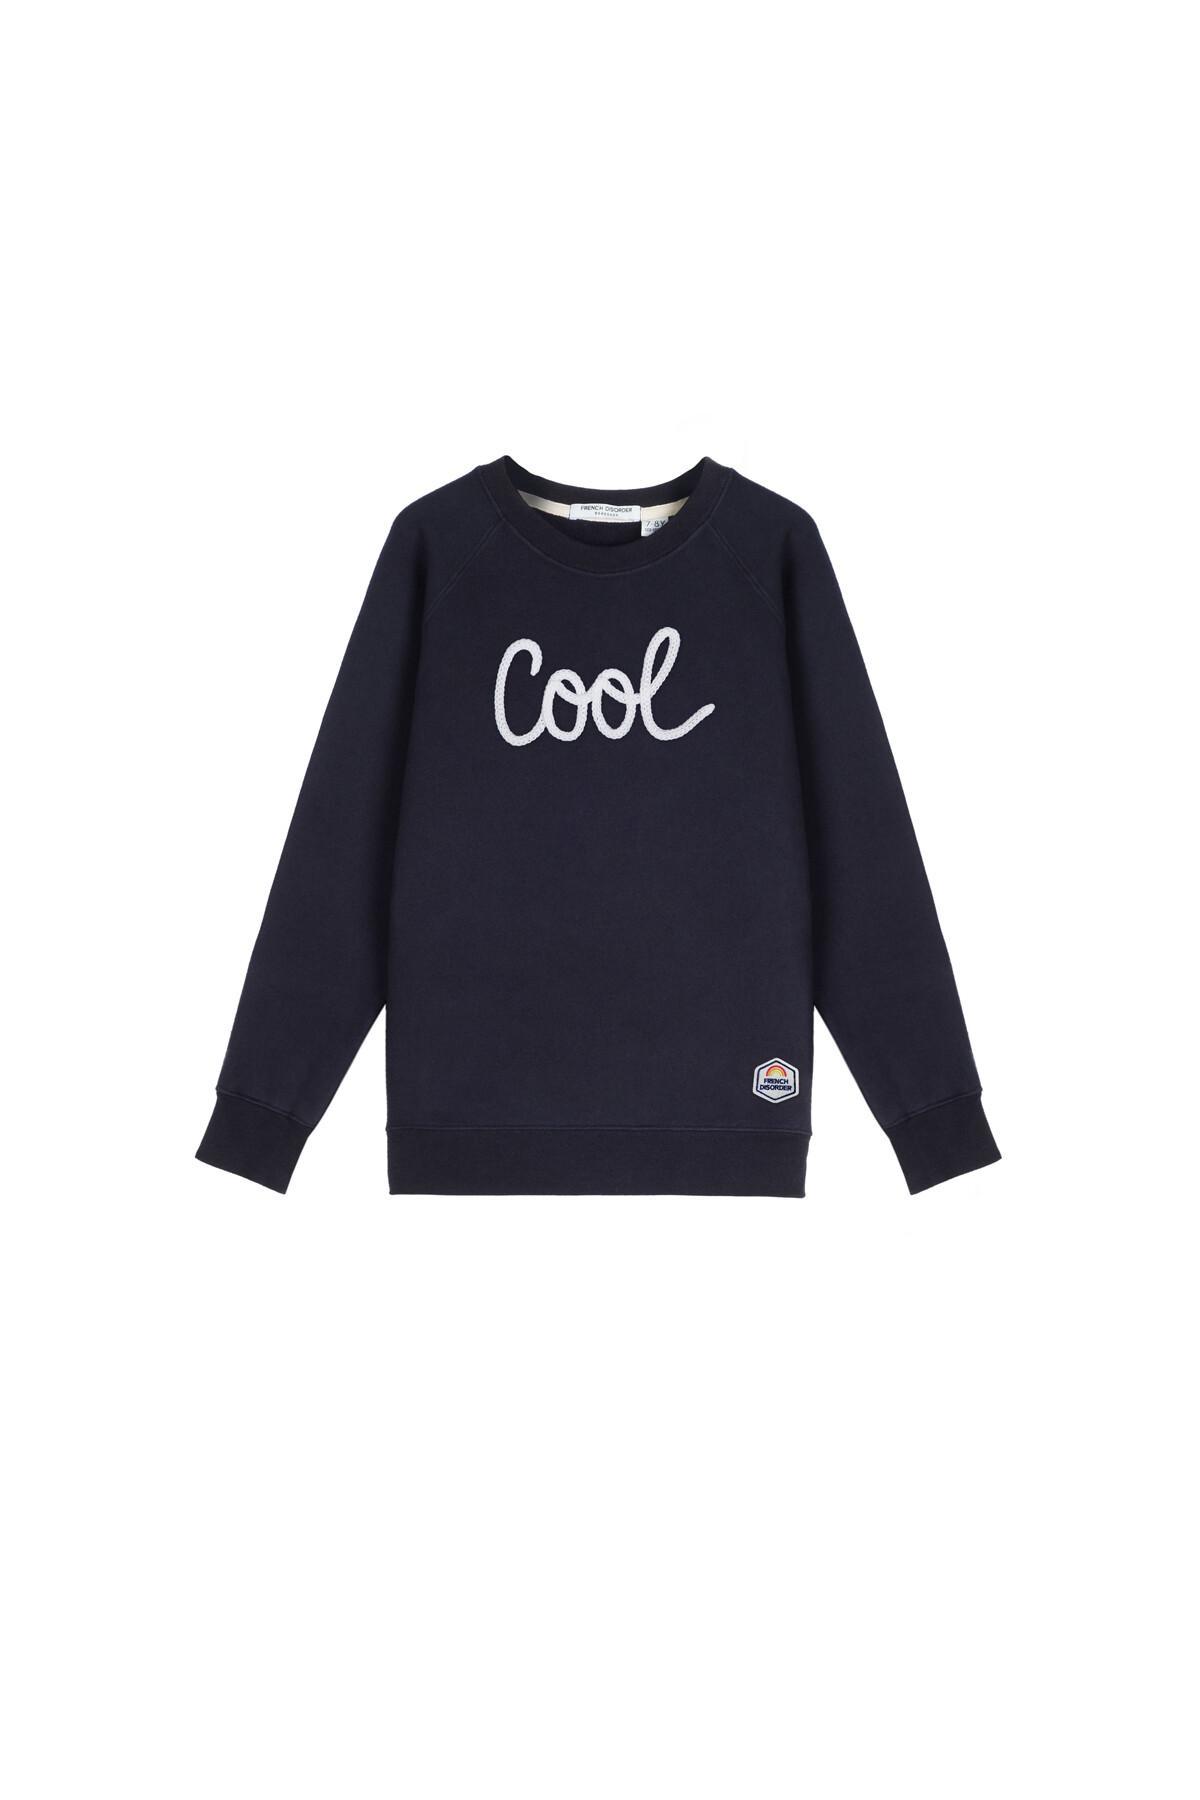 Sweatshirt child French Disorder Cool